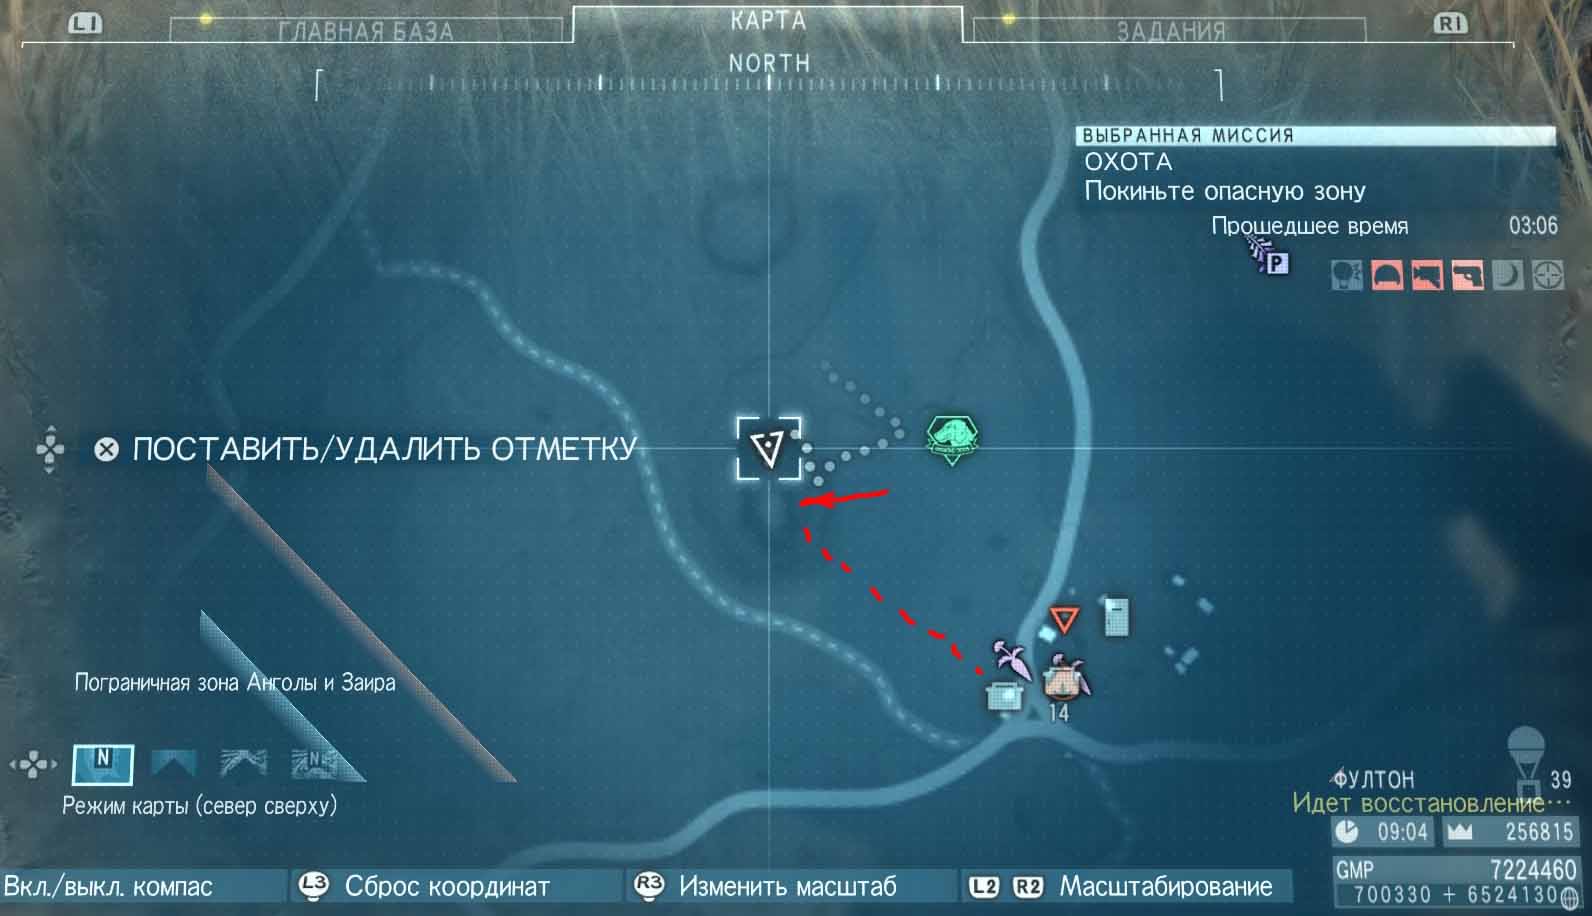 Metal Gear Solid V: The Phantom Pain Возле лагеря Кизиба пойман полосатый шакал